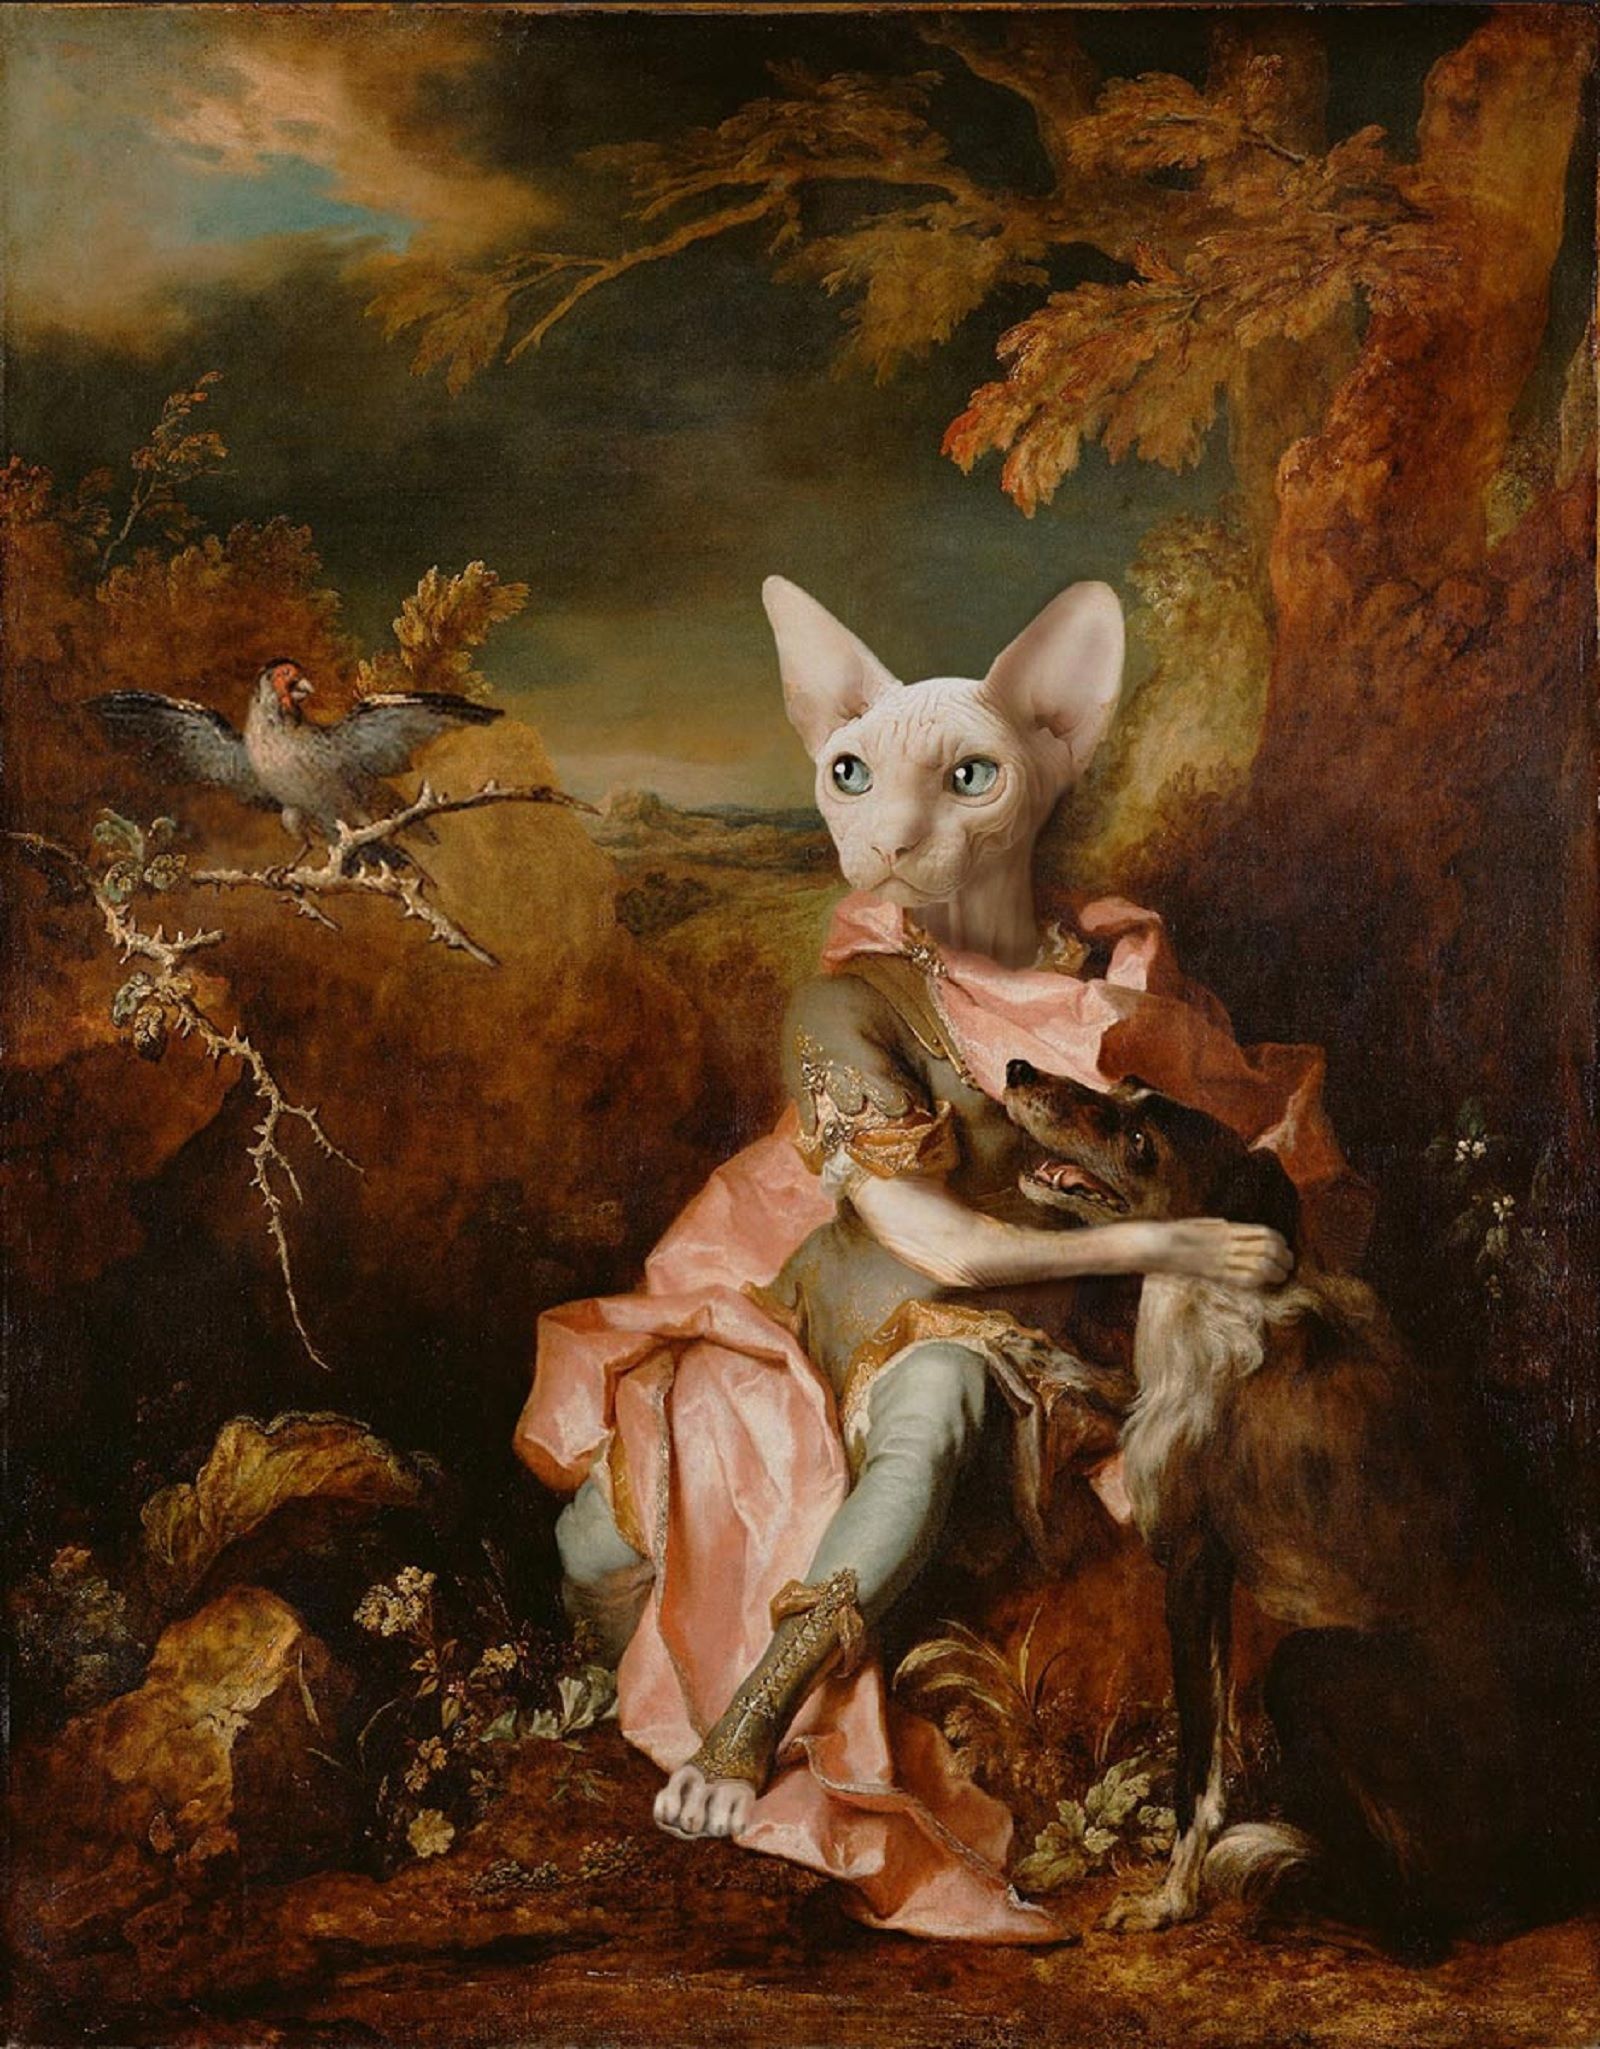 Amusing Images Of Animals Photoshopped Into Renaissance Paintings image 14